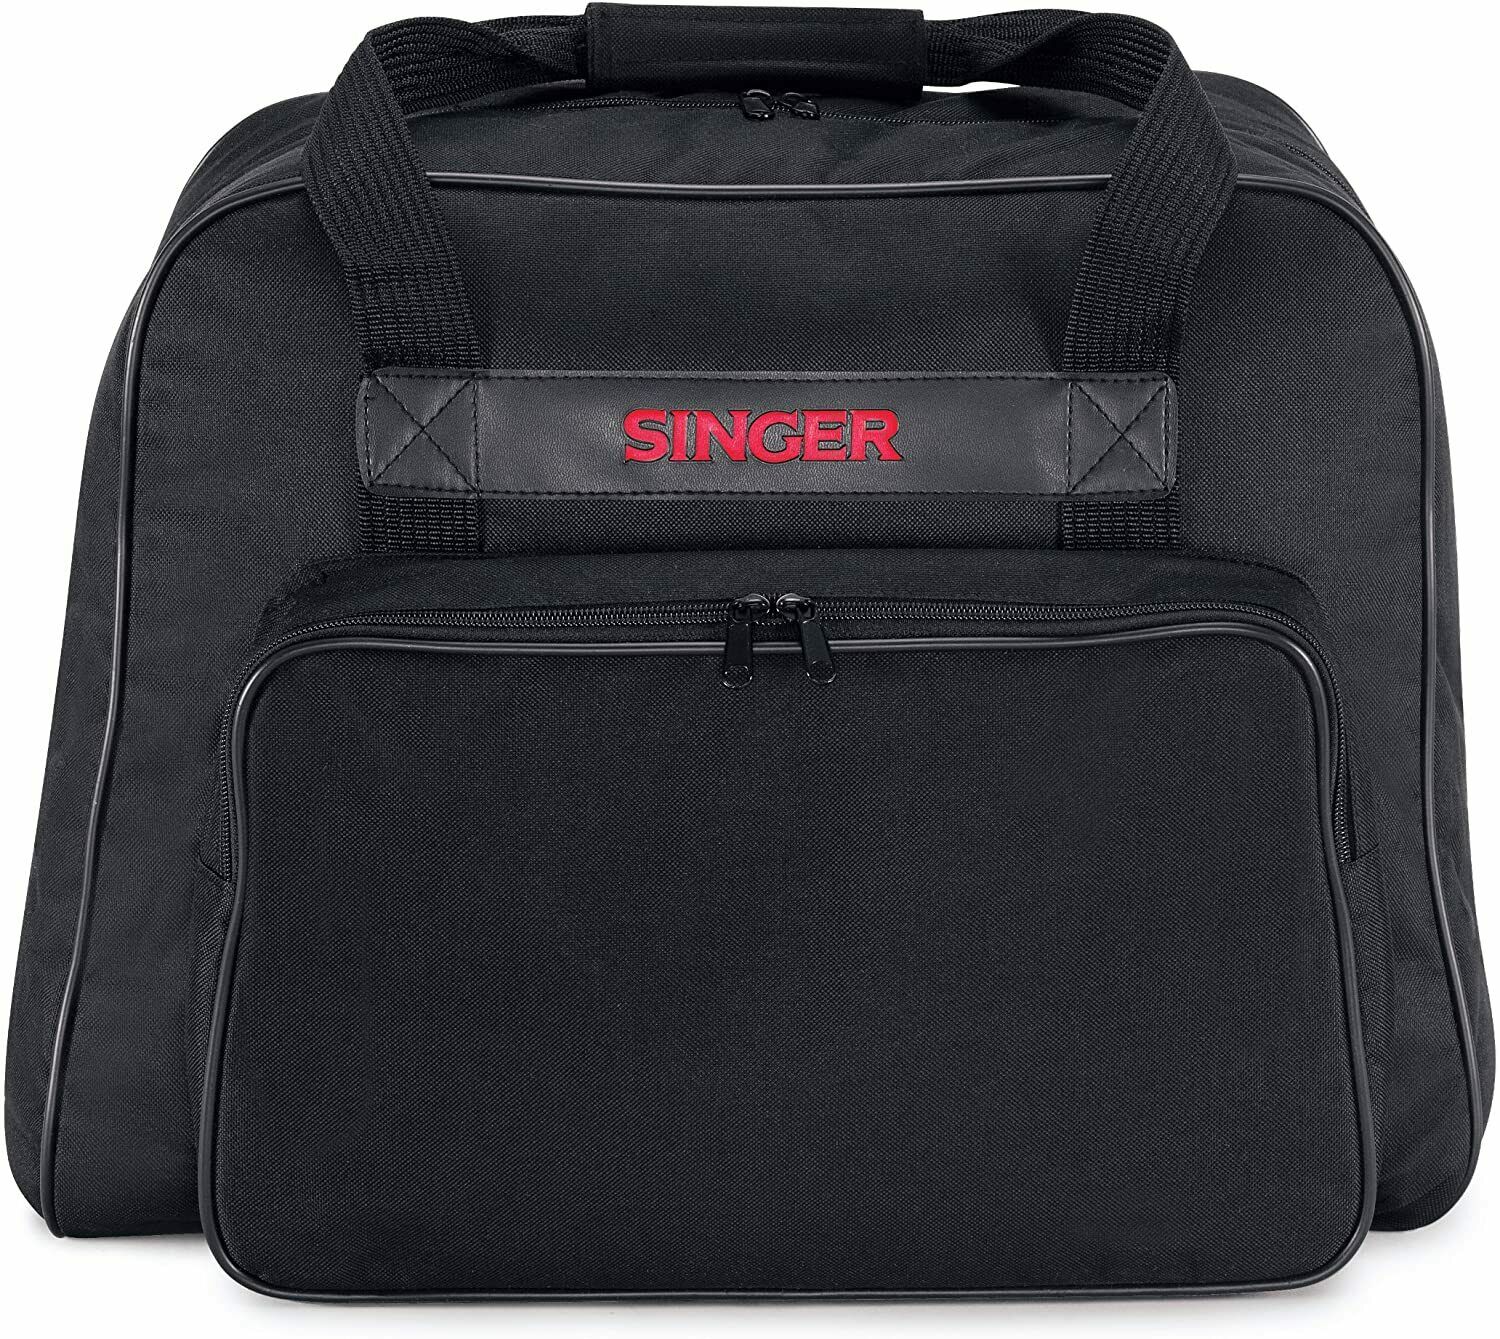 Singer Universal Sewing Machine Tote Storage Case Carry Bag